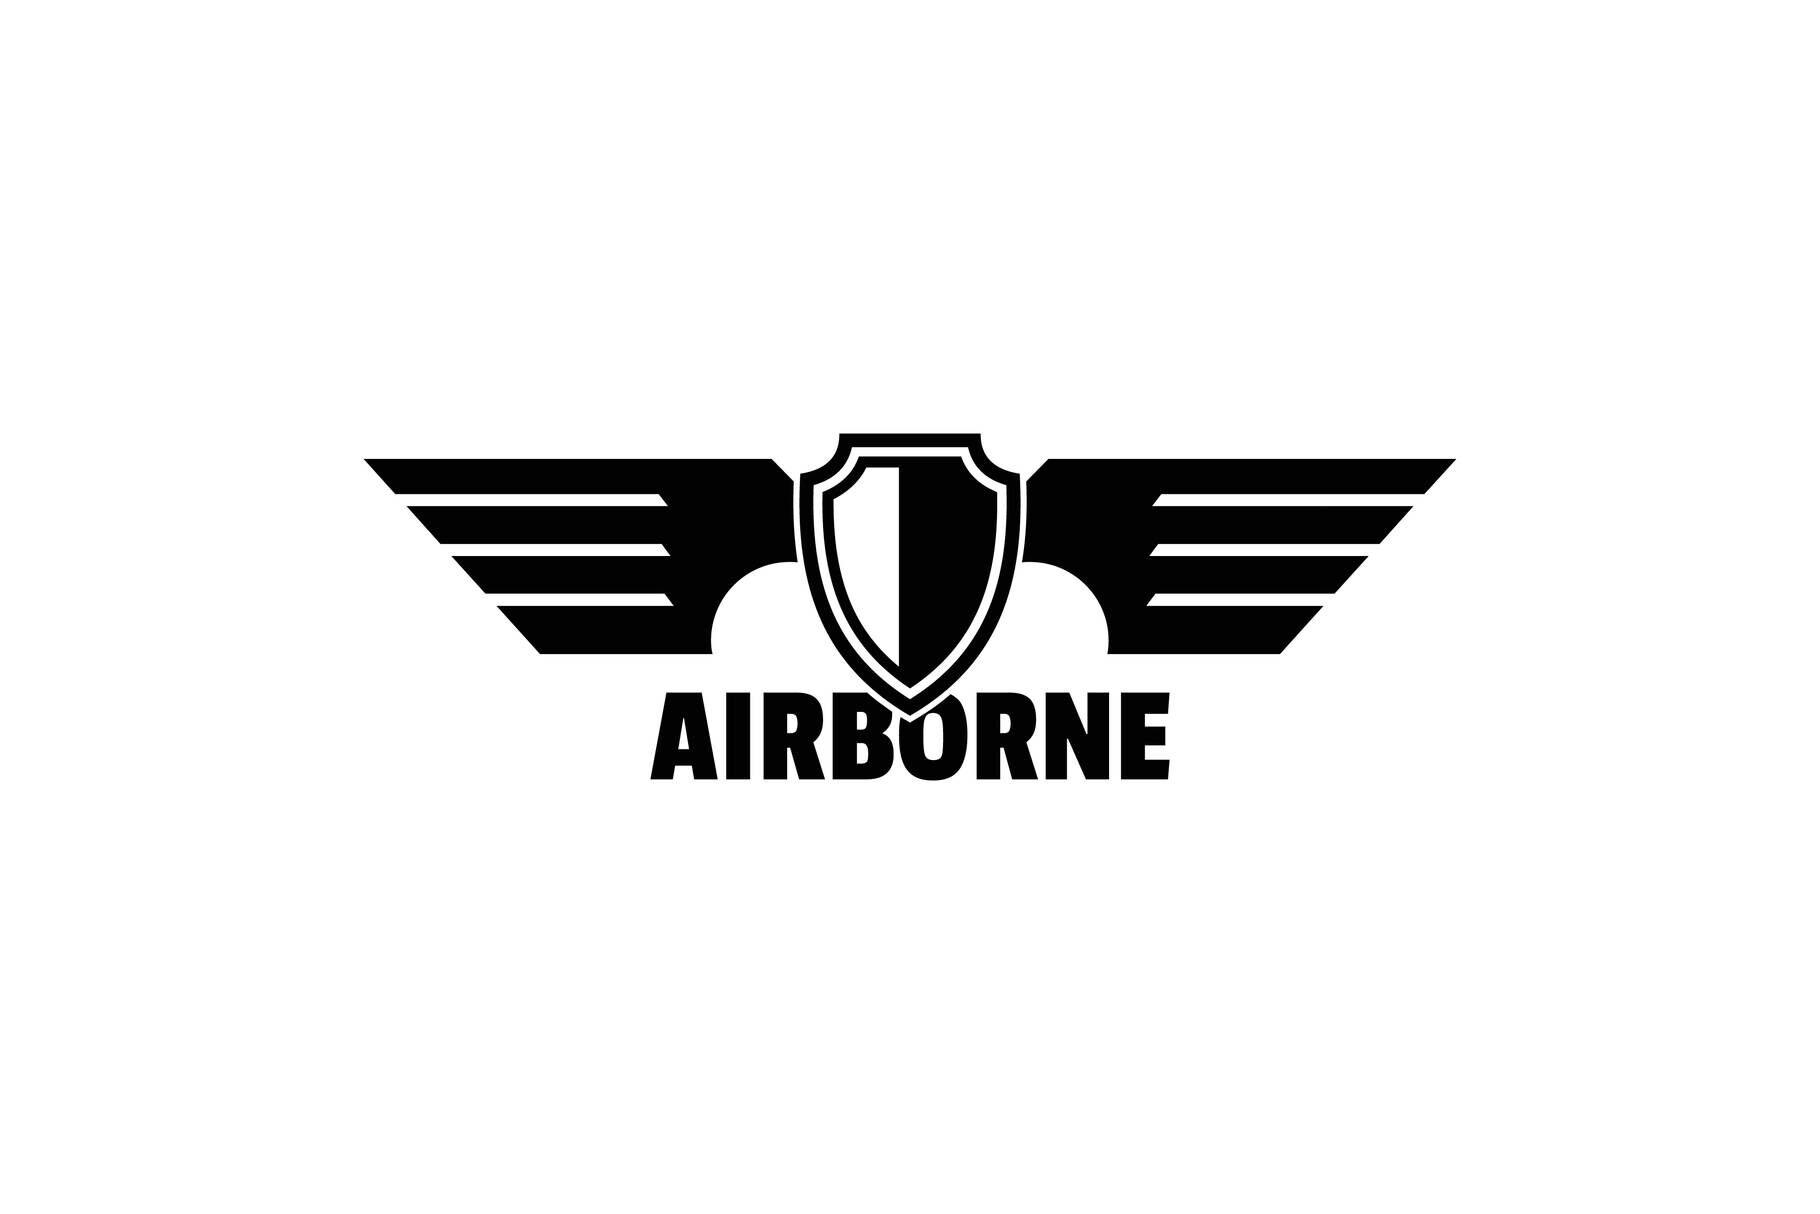 Airborne wings logo, simple style By Anatolir56 | TheHungryJPEG